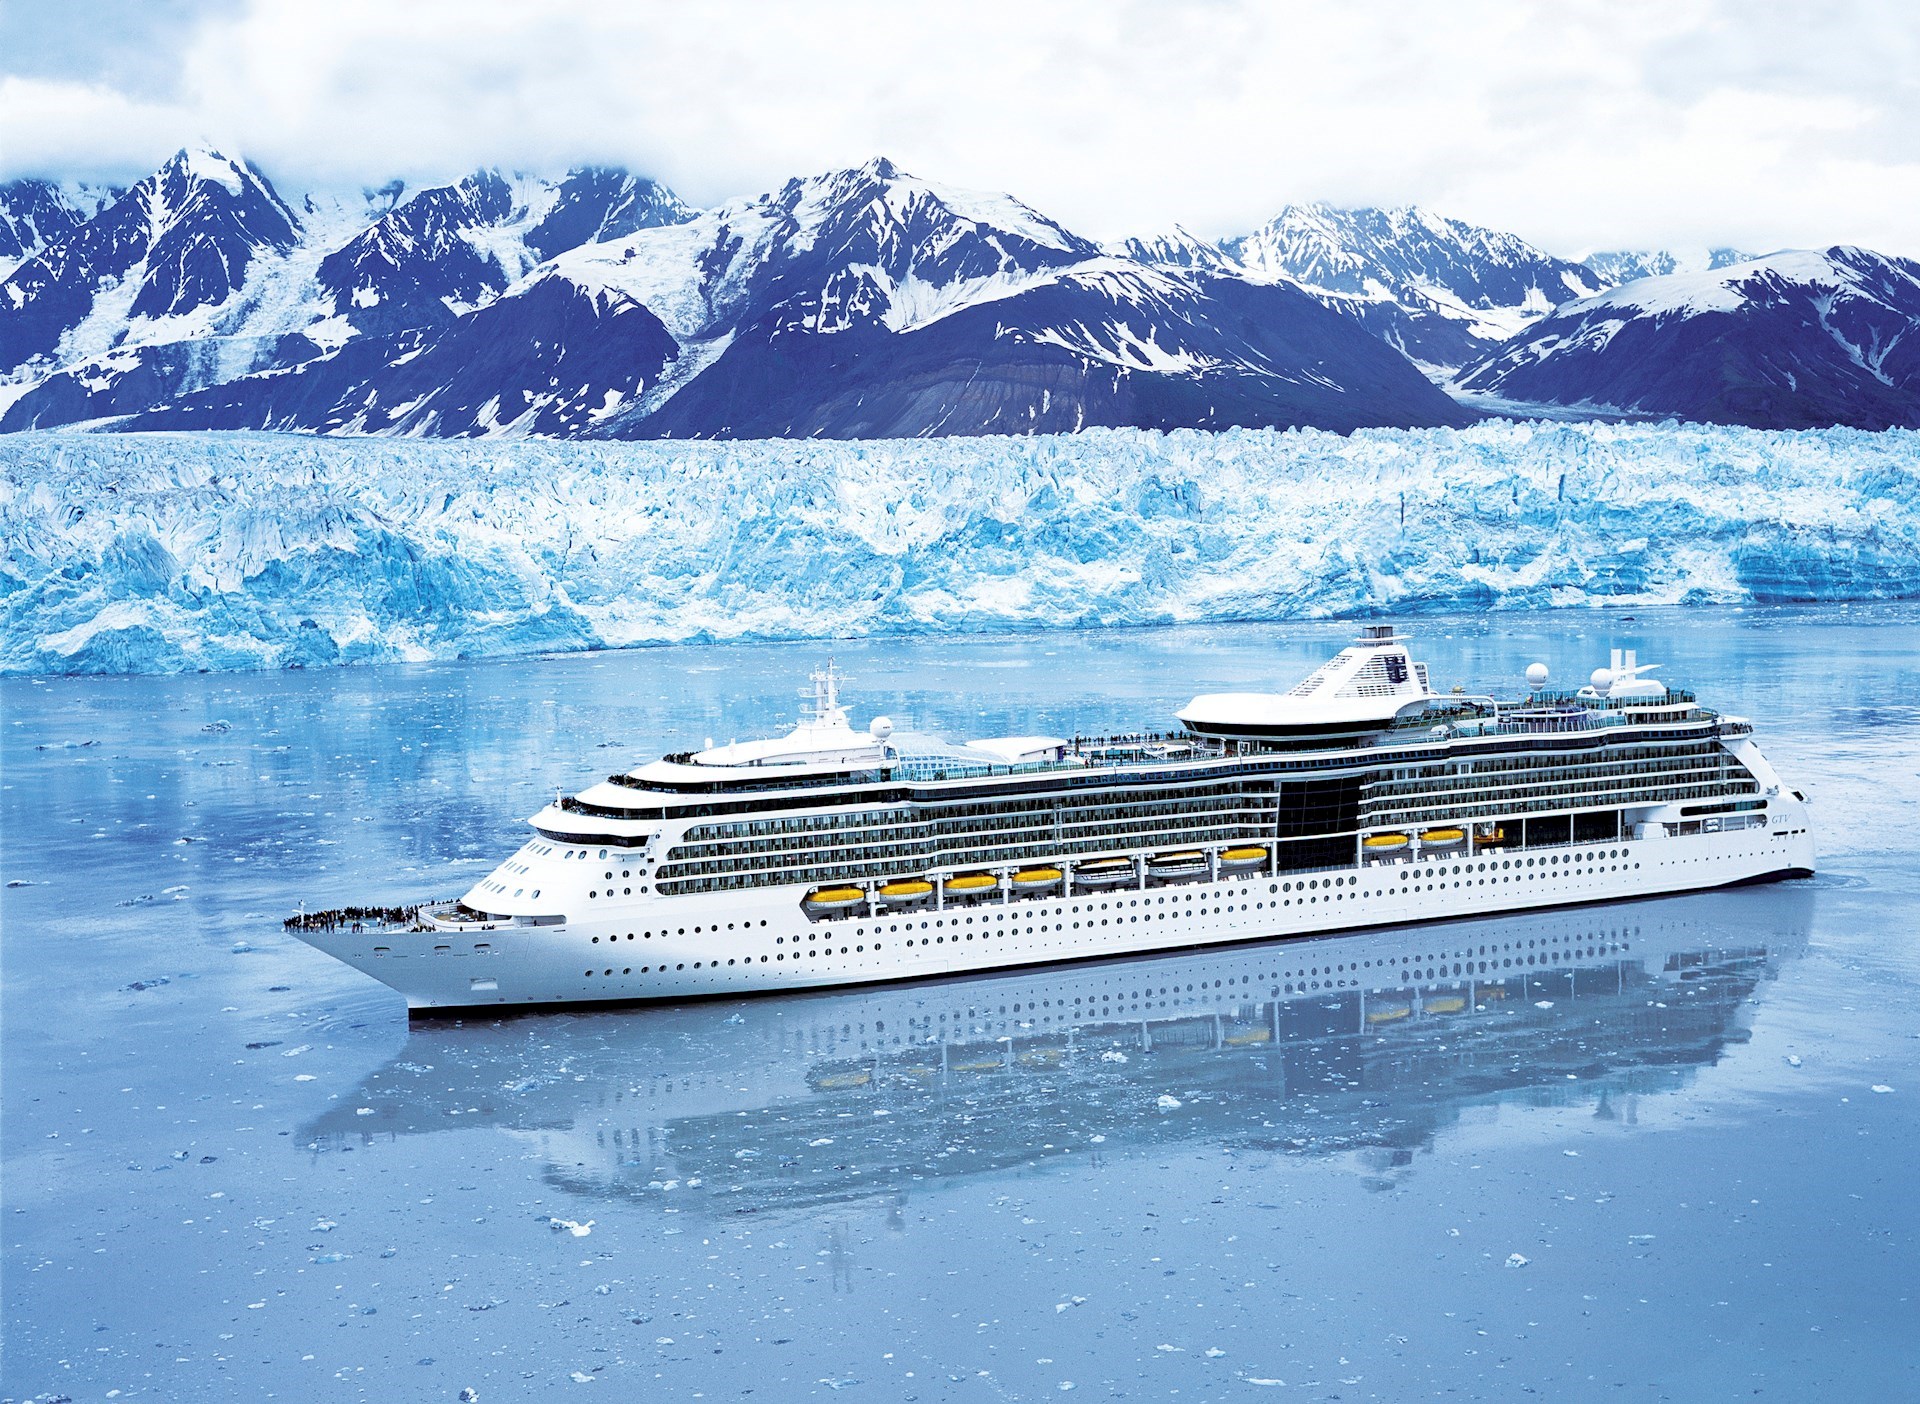 Royal Caribbean Brilliance of the Seas Cruise Ship 2021 / 2022